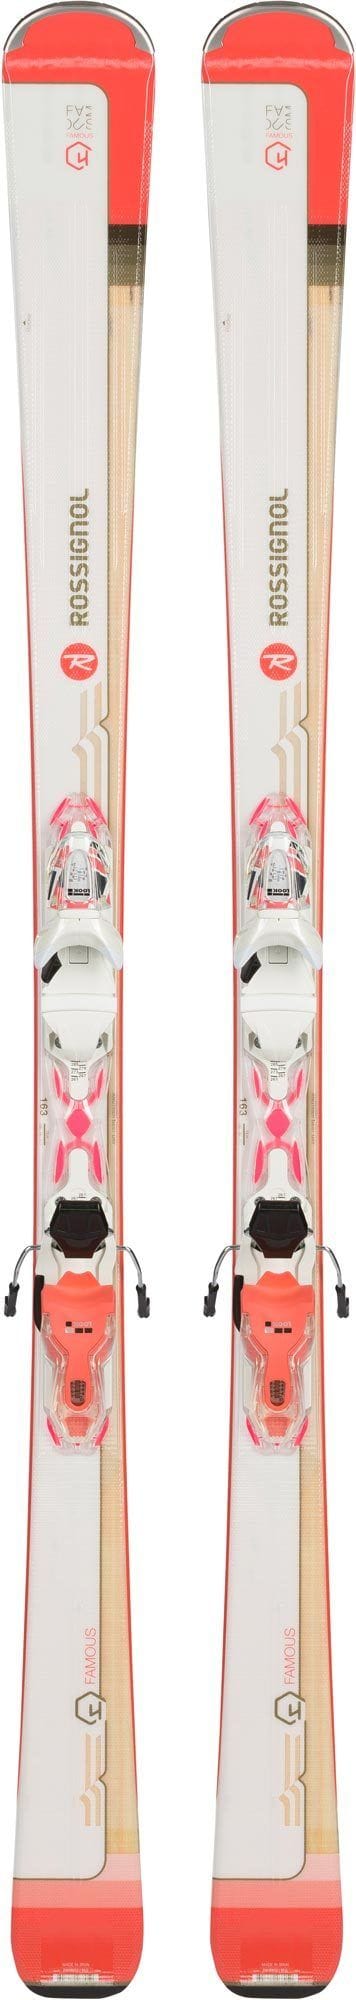 Горные лыжи Rossignol Famous 4 W с креплениями от магазина Супер Спорт